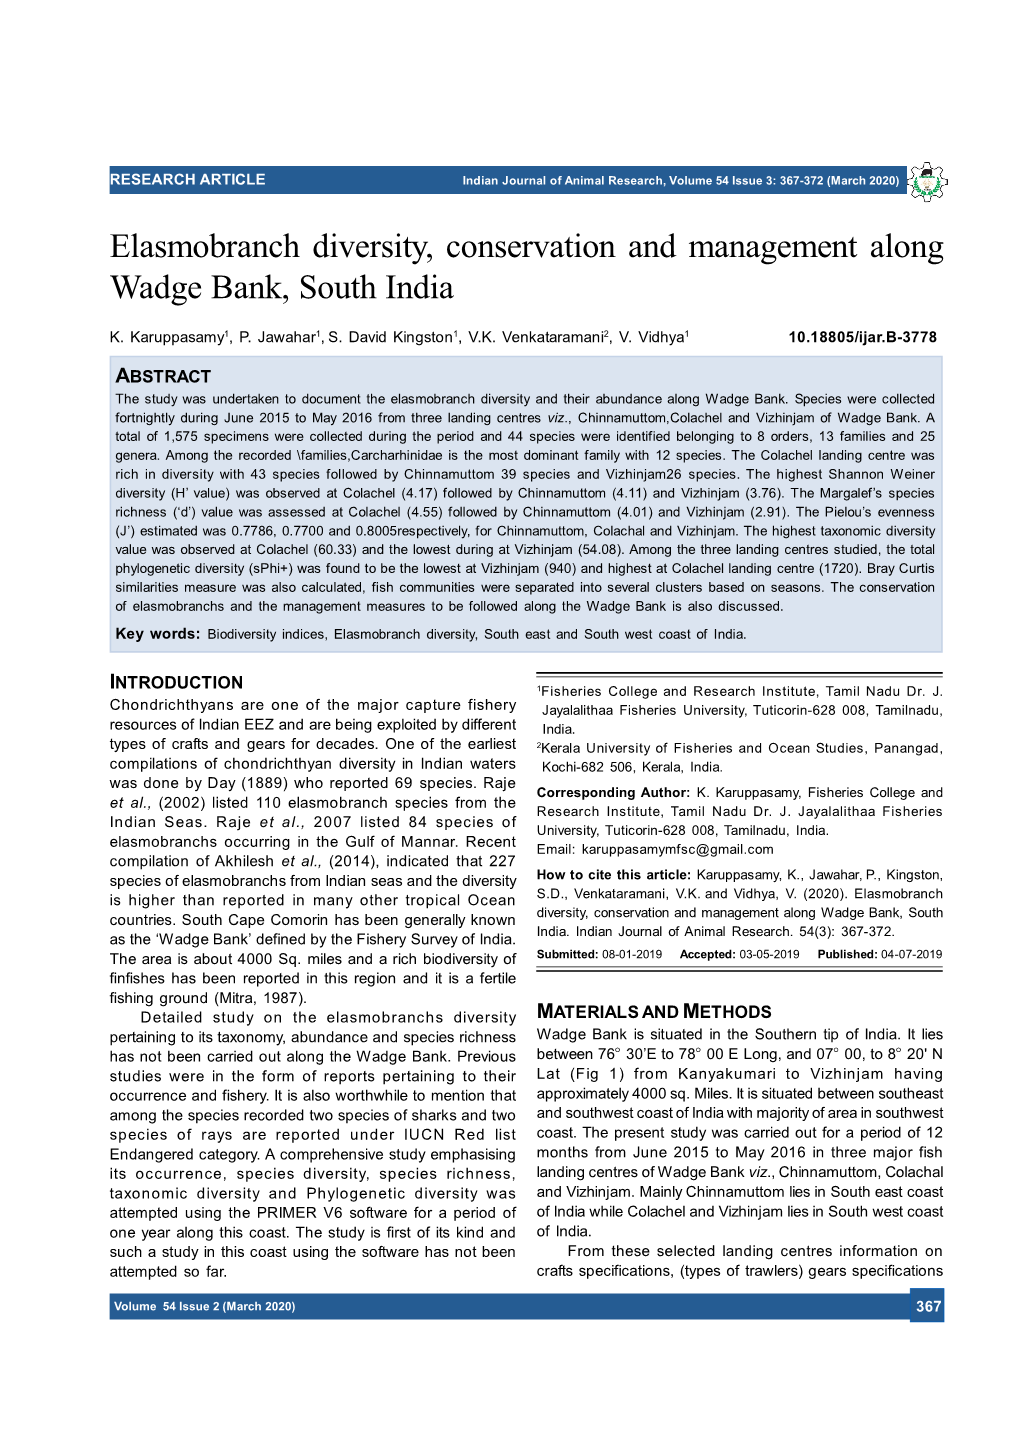 Elasmobranch Diversity, Conservation and Management Along Wadge Bank, South India